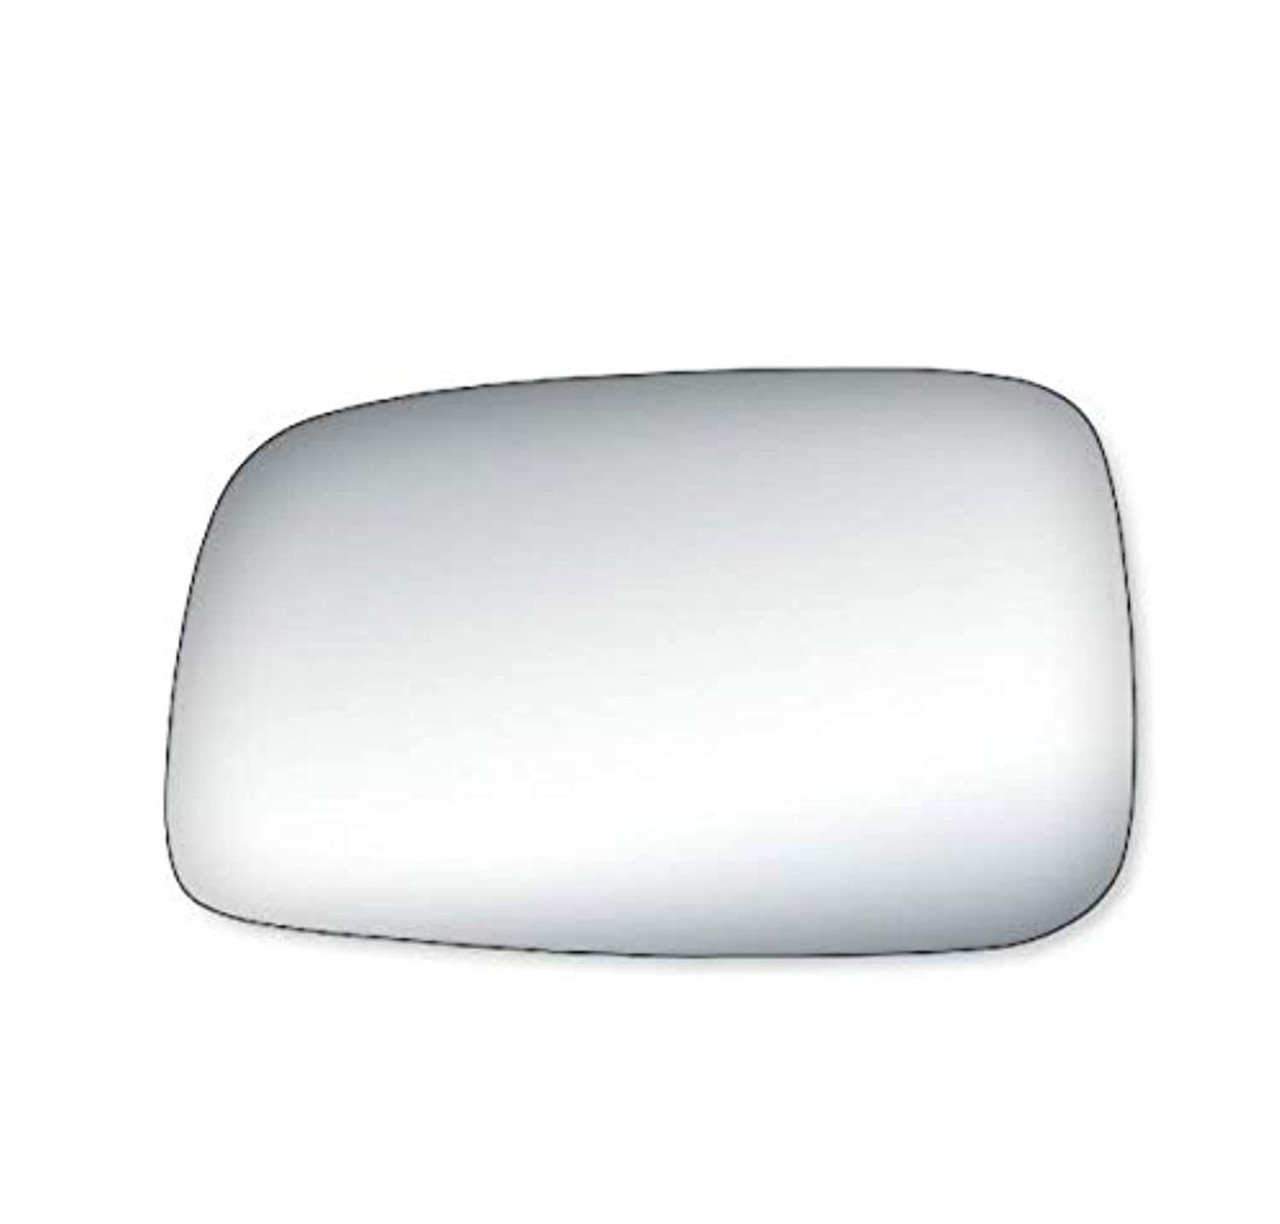 K SourceFits 05-10 tC / 2006 Xa Left Driver Side Mirror Glass Lens w/Adhesive